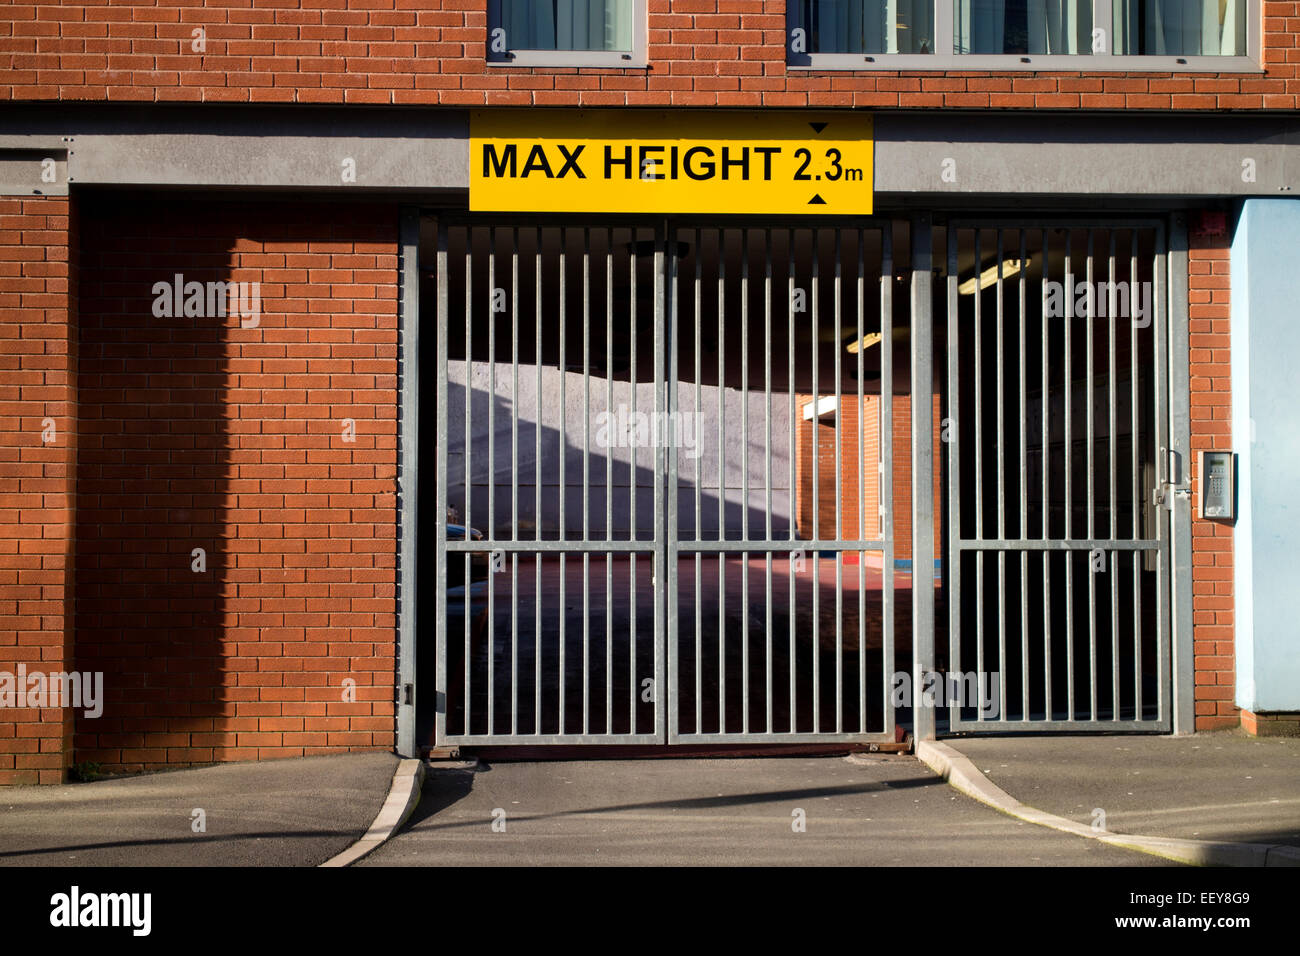 Max height sign, Birmingham, UK Stock Photo